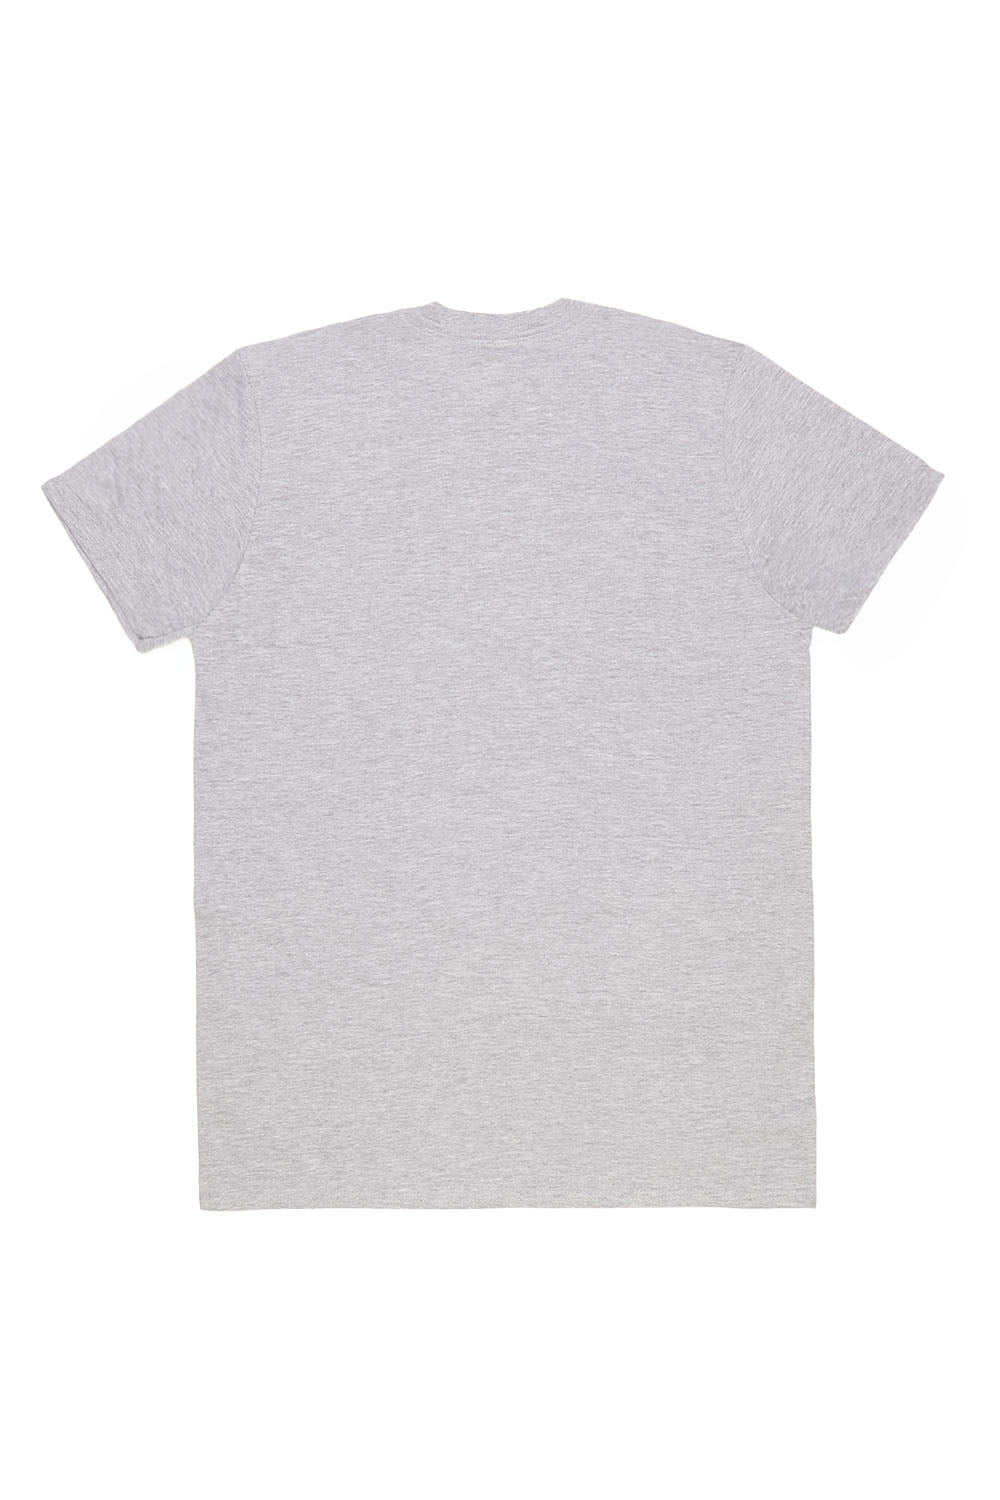 Illinois T-Shirt in Ash Grey (Custom Packs)